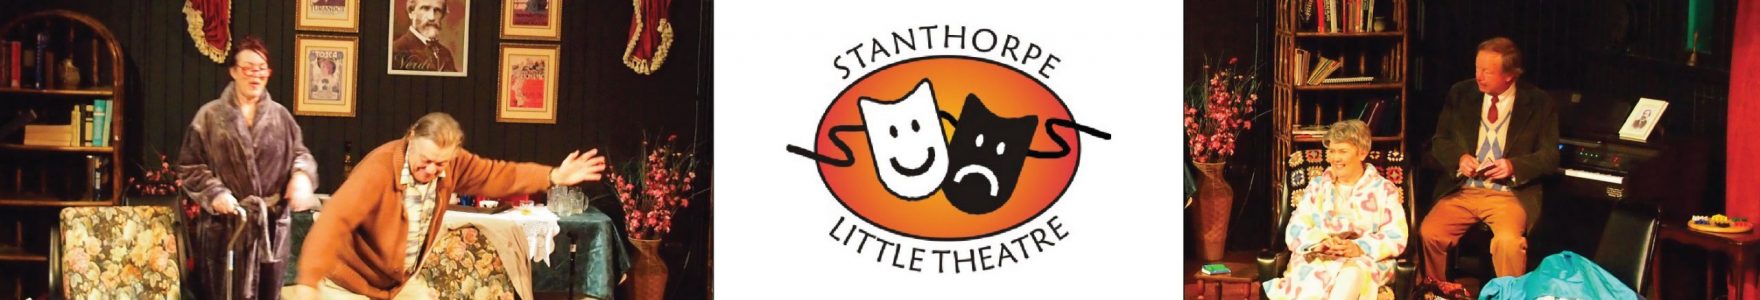 Stanthorpe Little Theatre